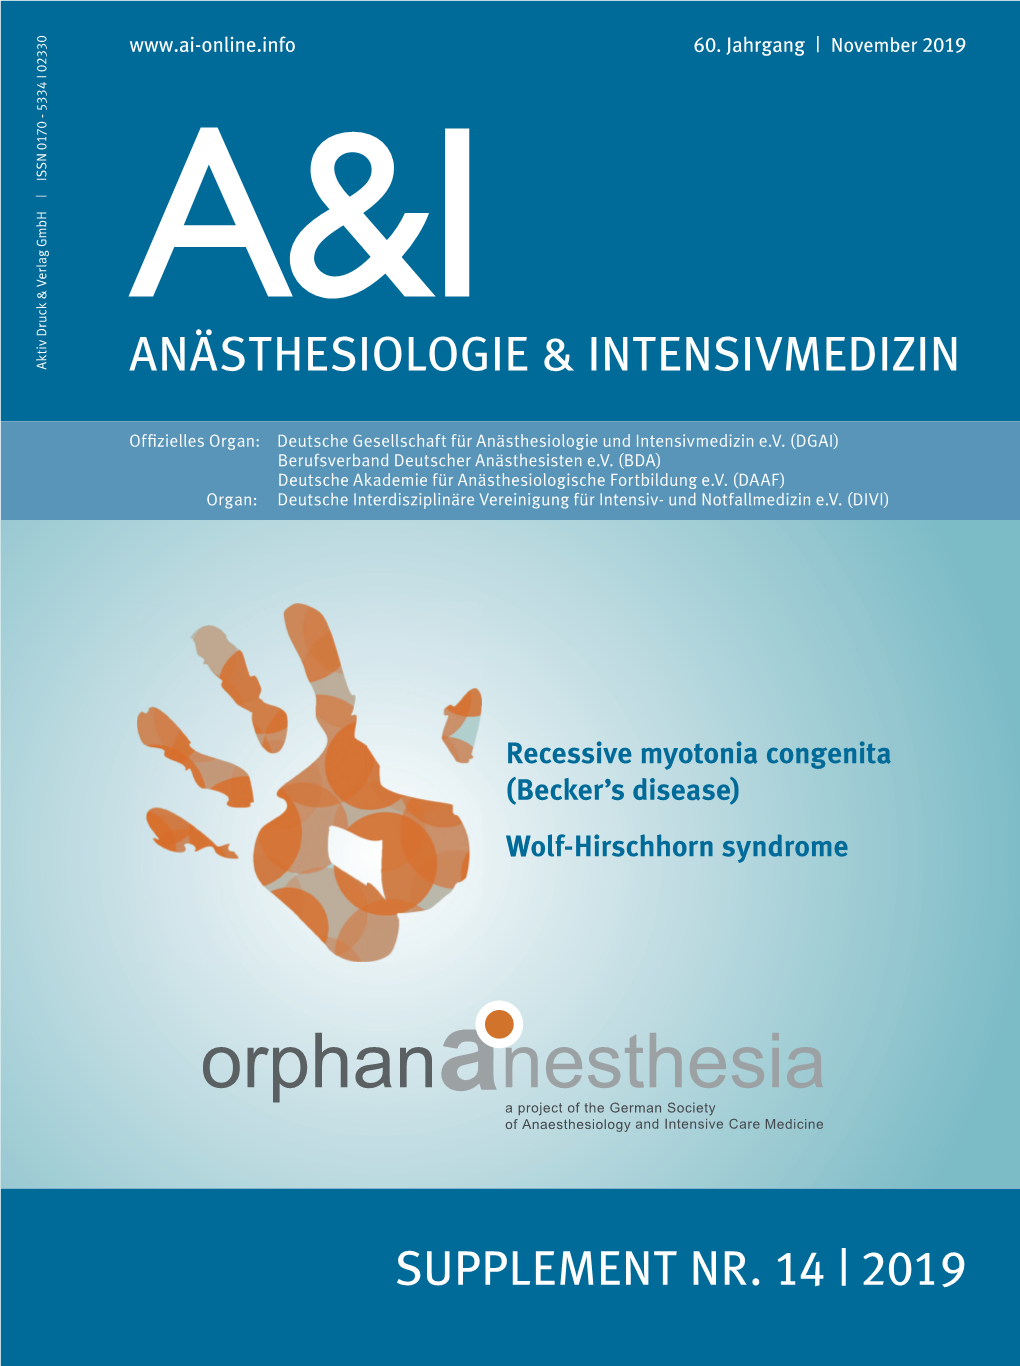 Supplement Nr. 14 | 2019 Anästhesiologie & Intensivmedizin